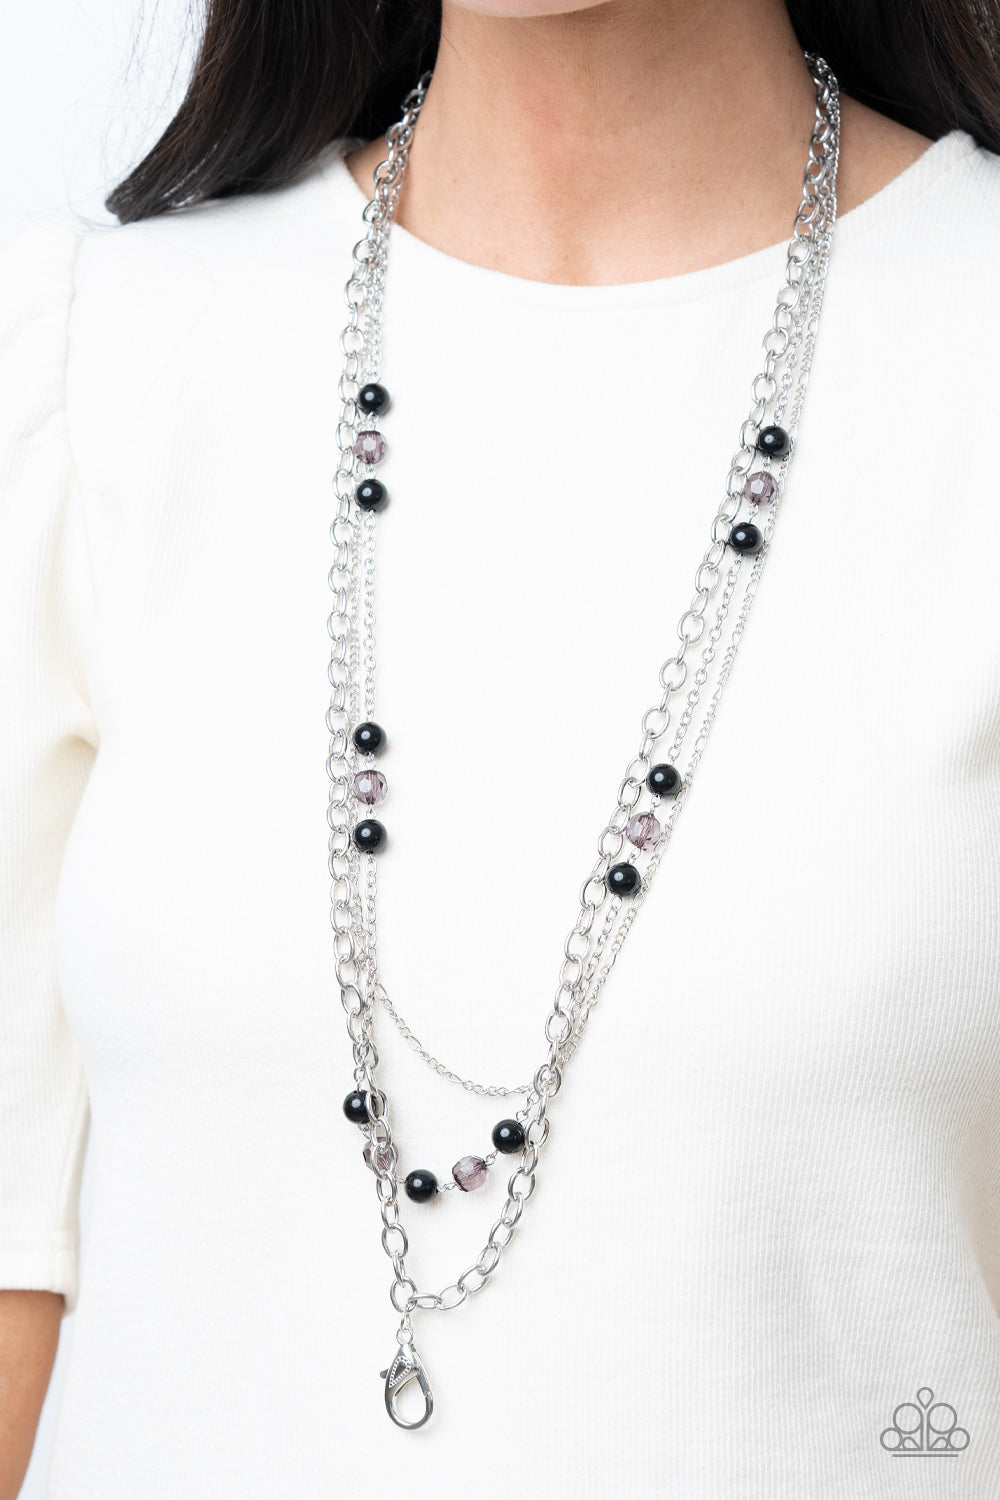 PRE-ORDER - Paparazzi GLEAM Work - Black - Lanyard Necklace & Earrings - $5 Jewelry with Ashley Swint